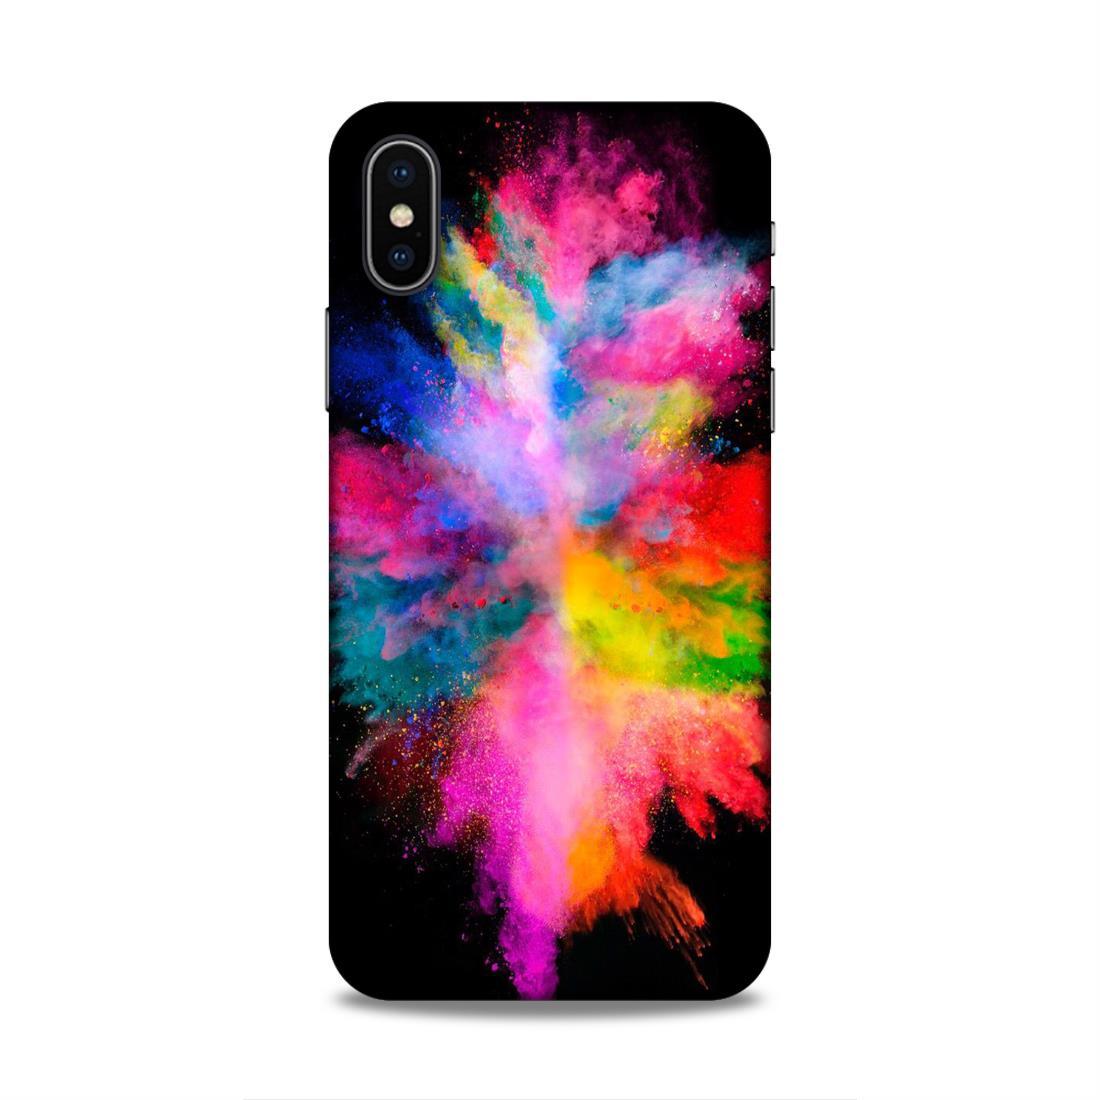 Colour Bomb iPhone X Mobile Case Cover